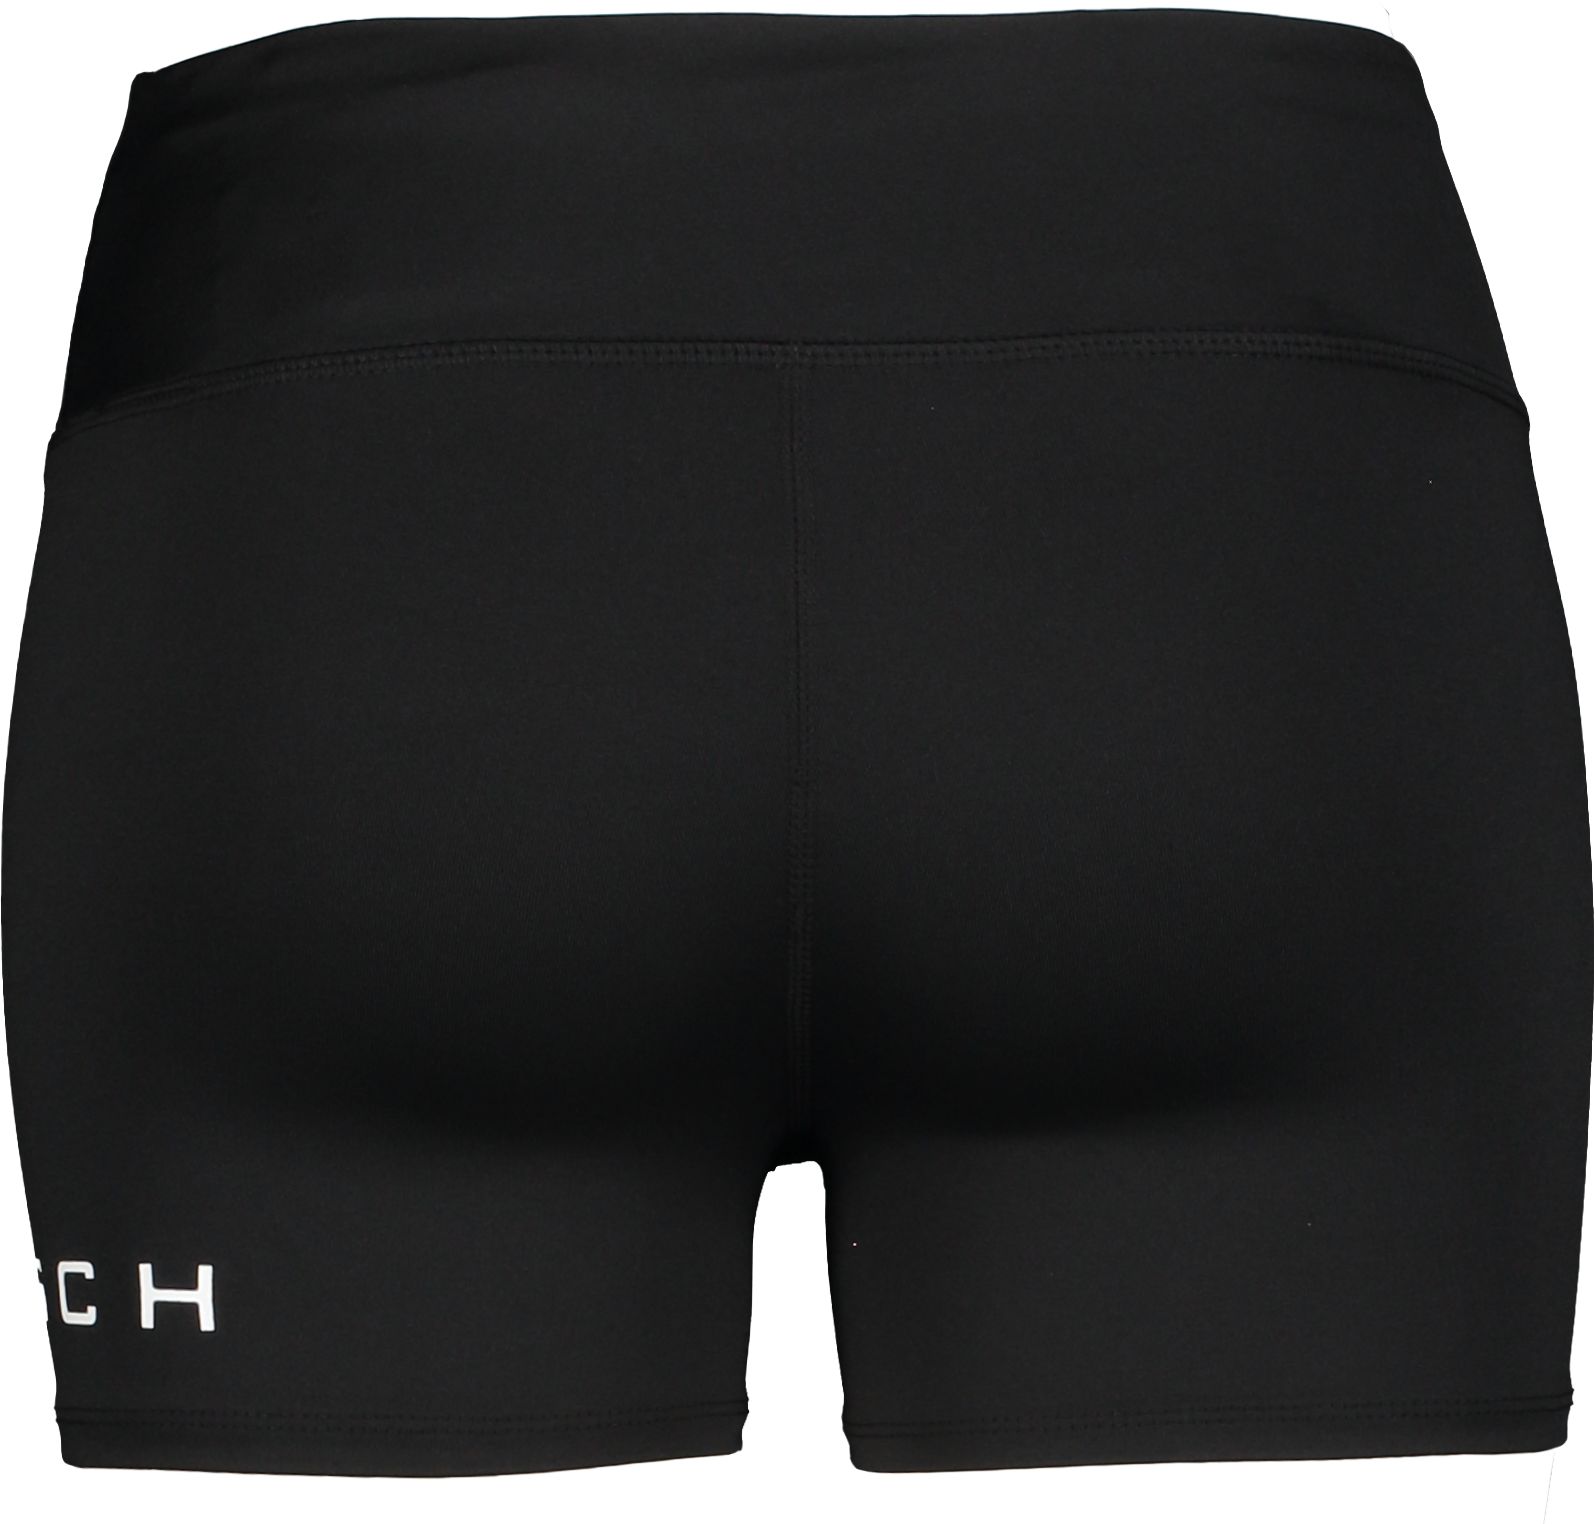 RÖHNISCH, Logo Hot Pants